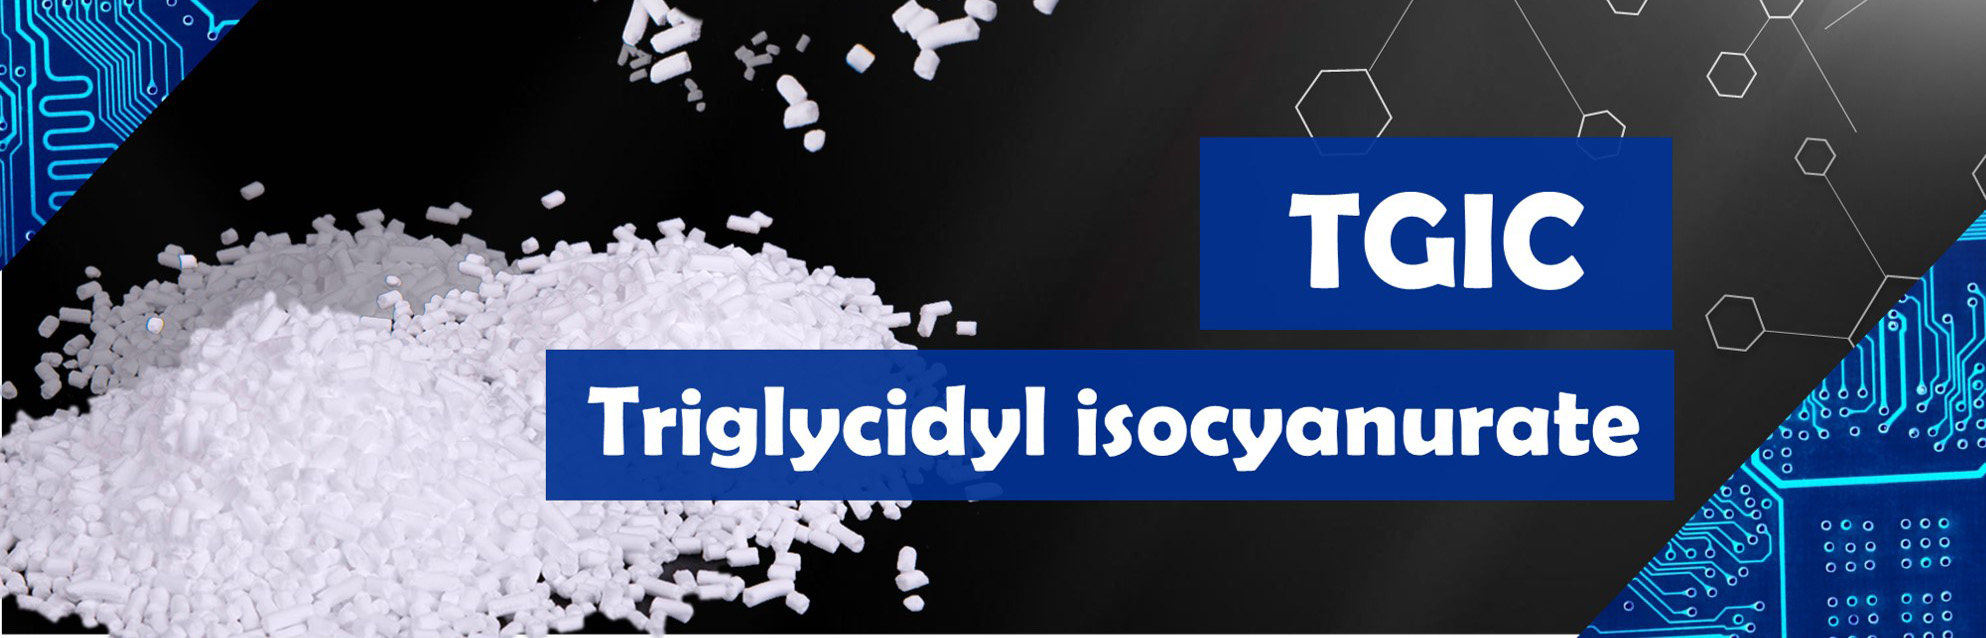 Triglycidyl Isocyanurate TGIC